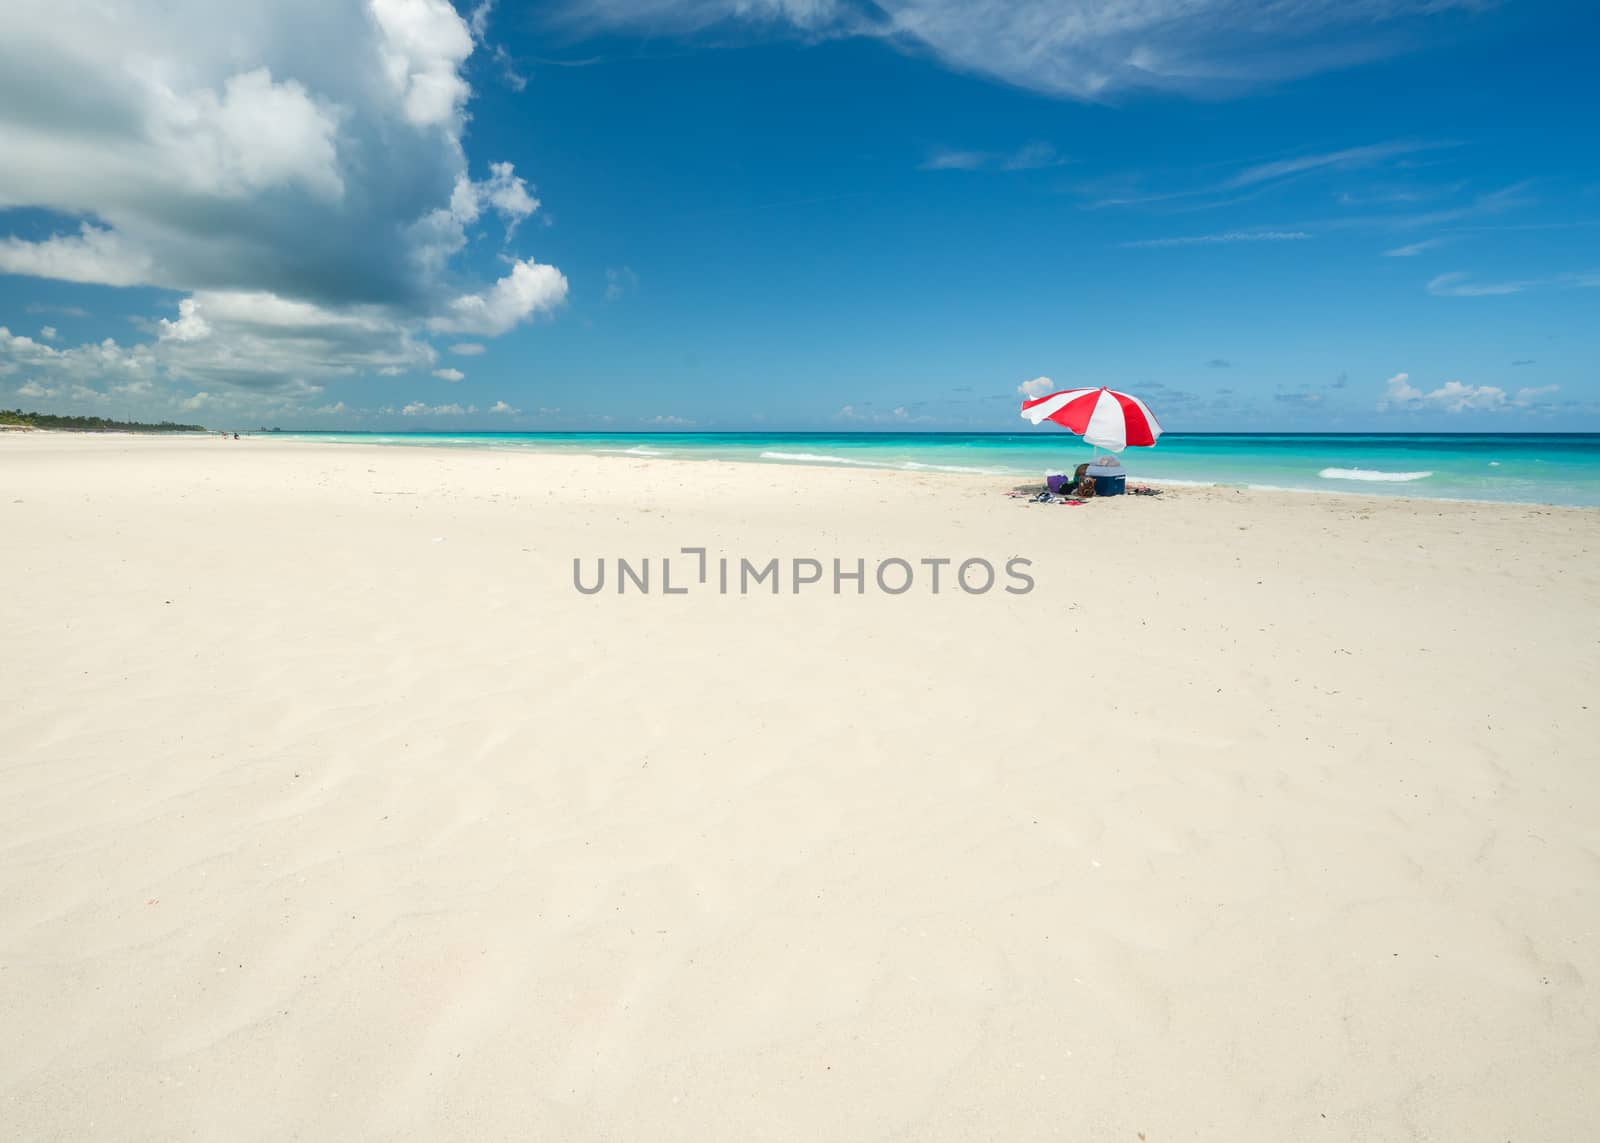 red umbrella on the sandy beach by Robertobinetti70